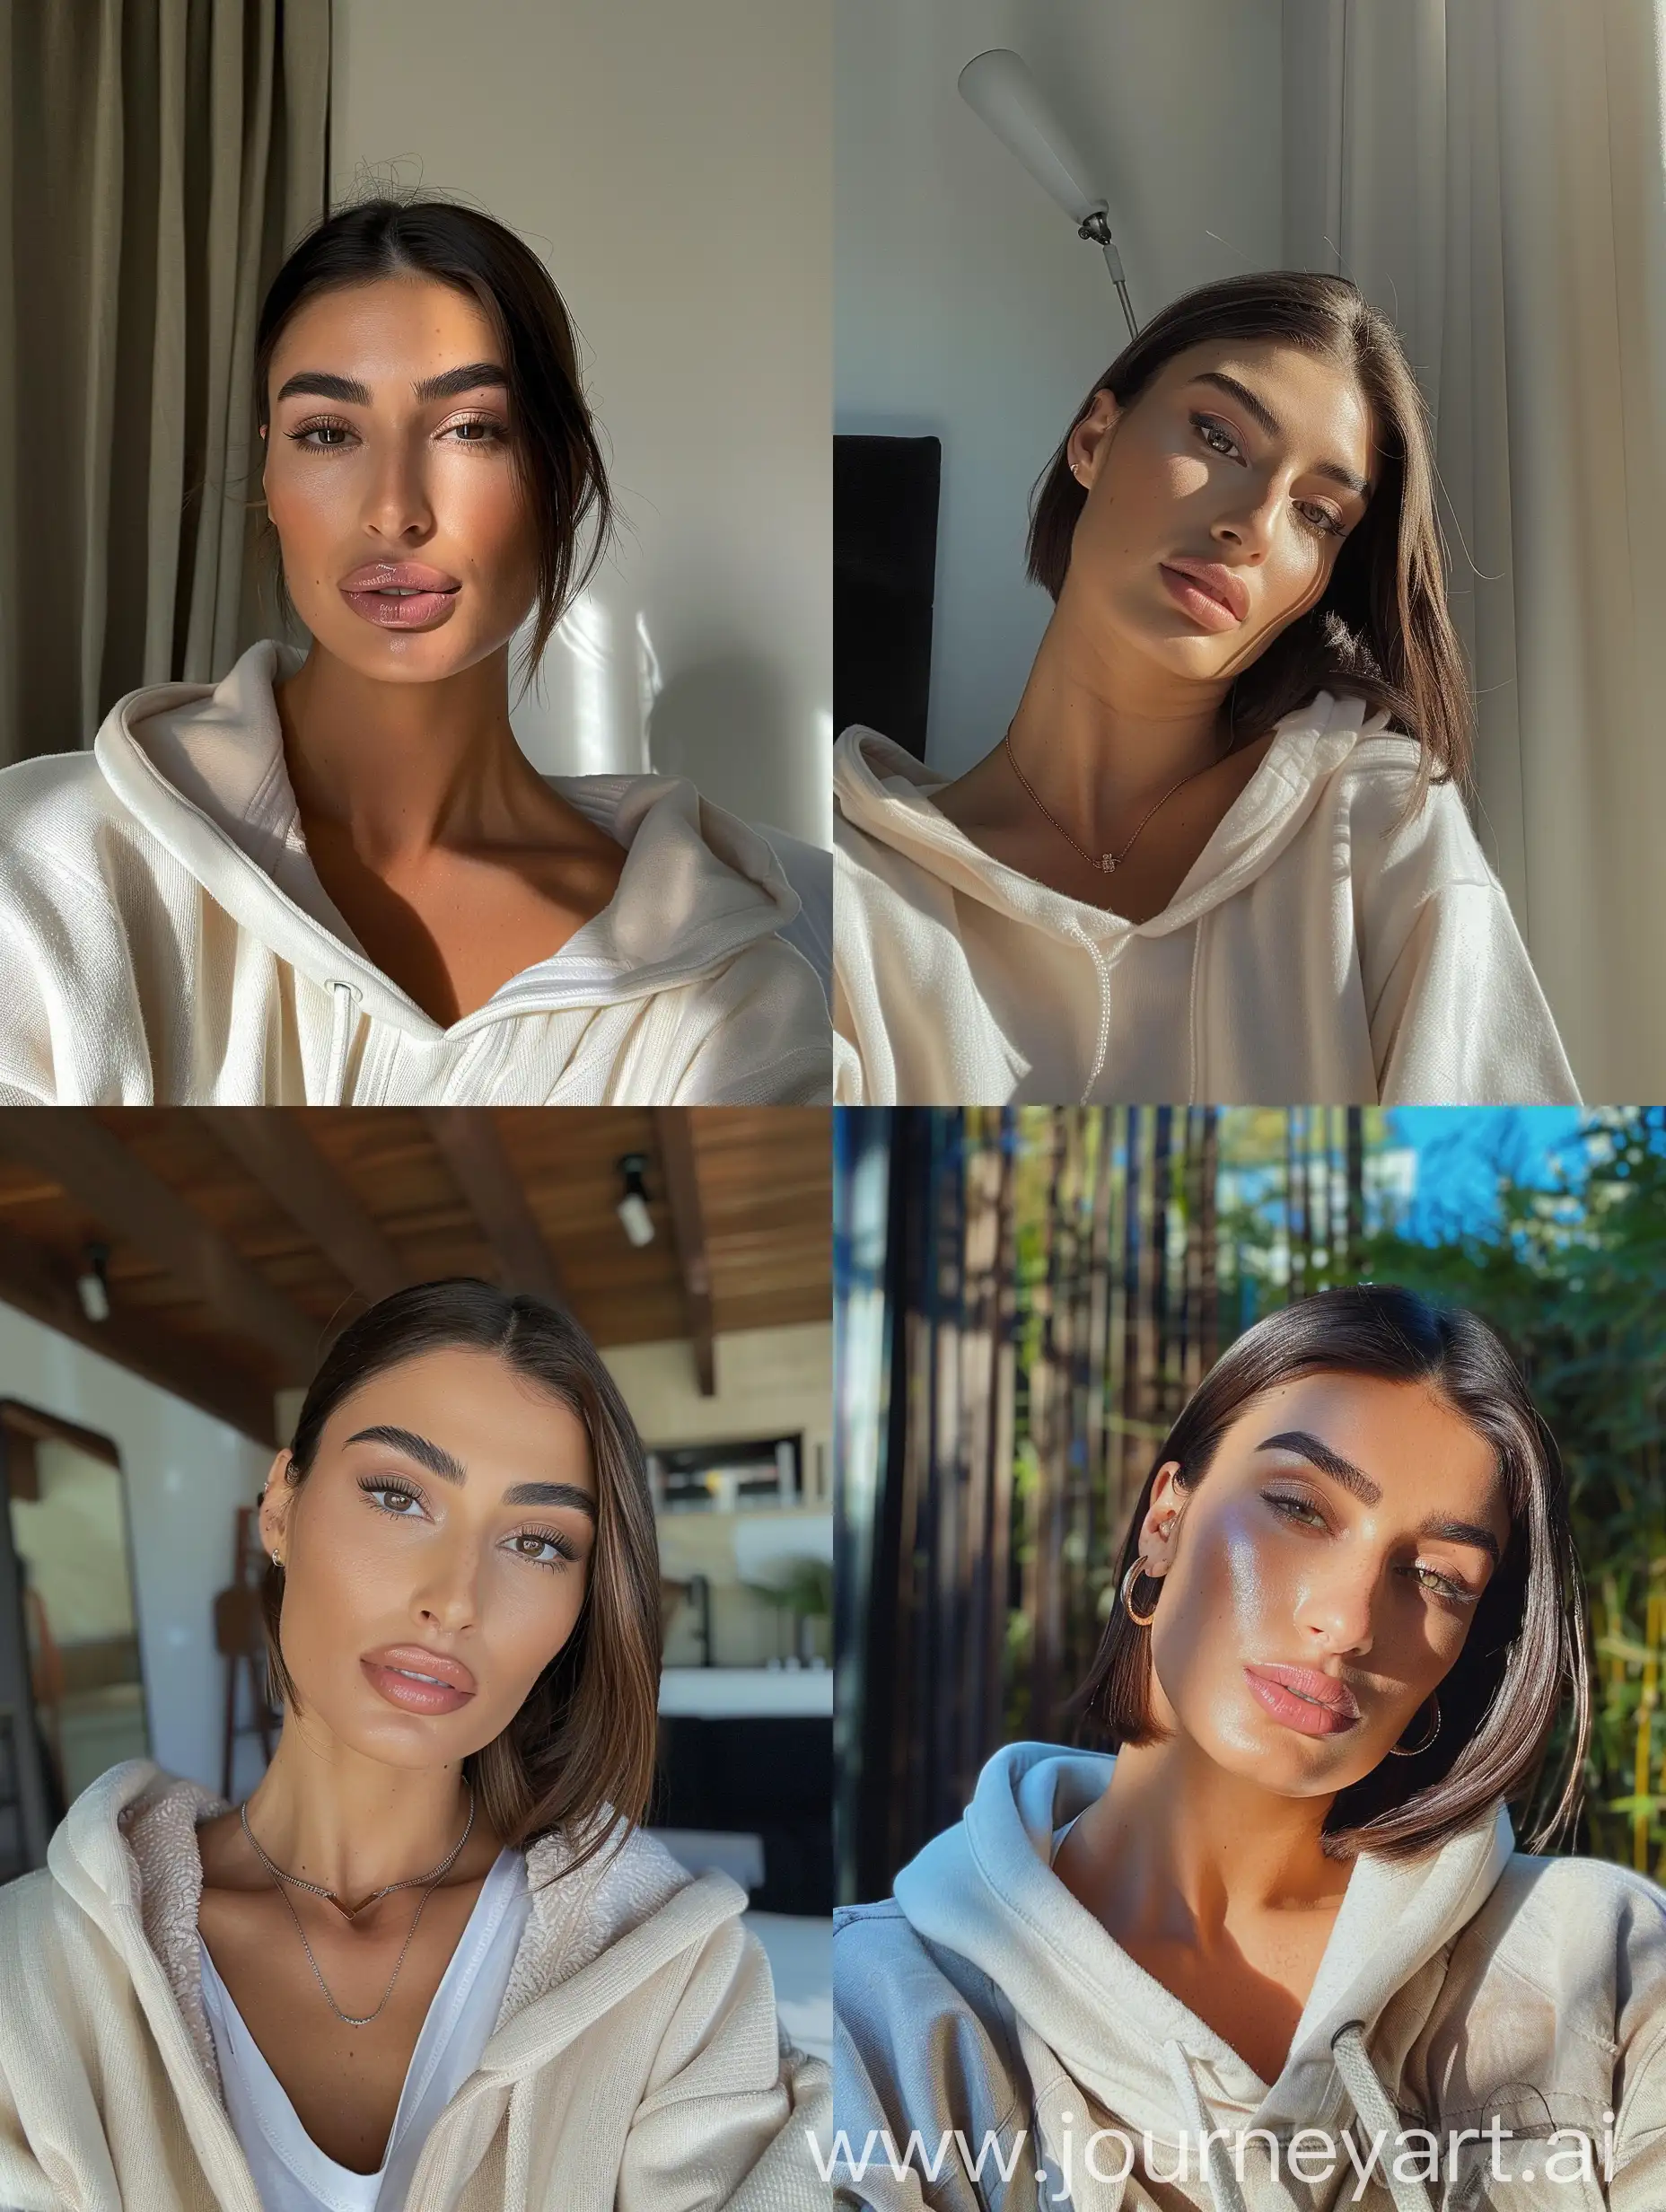 Aesthetic Instagram selfie of a woman, super model